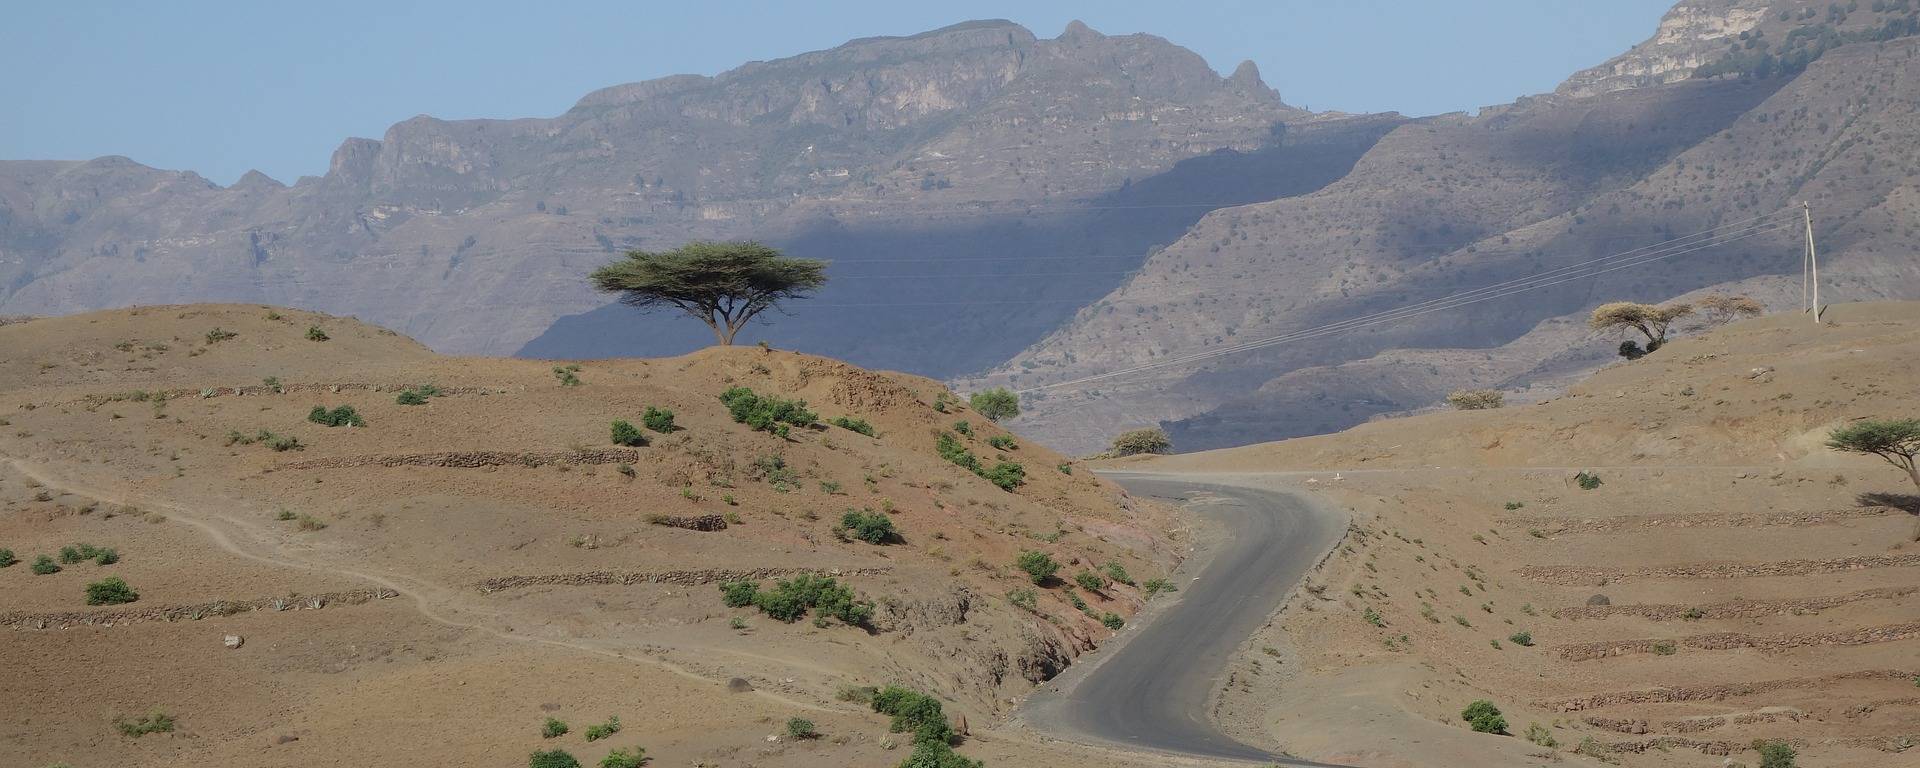 Marche en Ethiopie